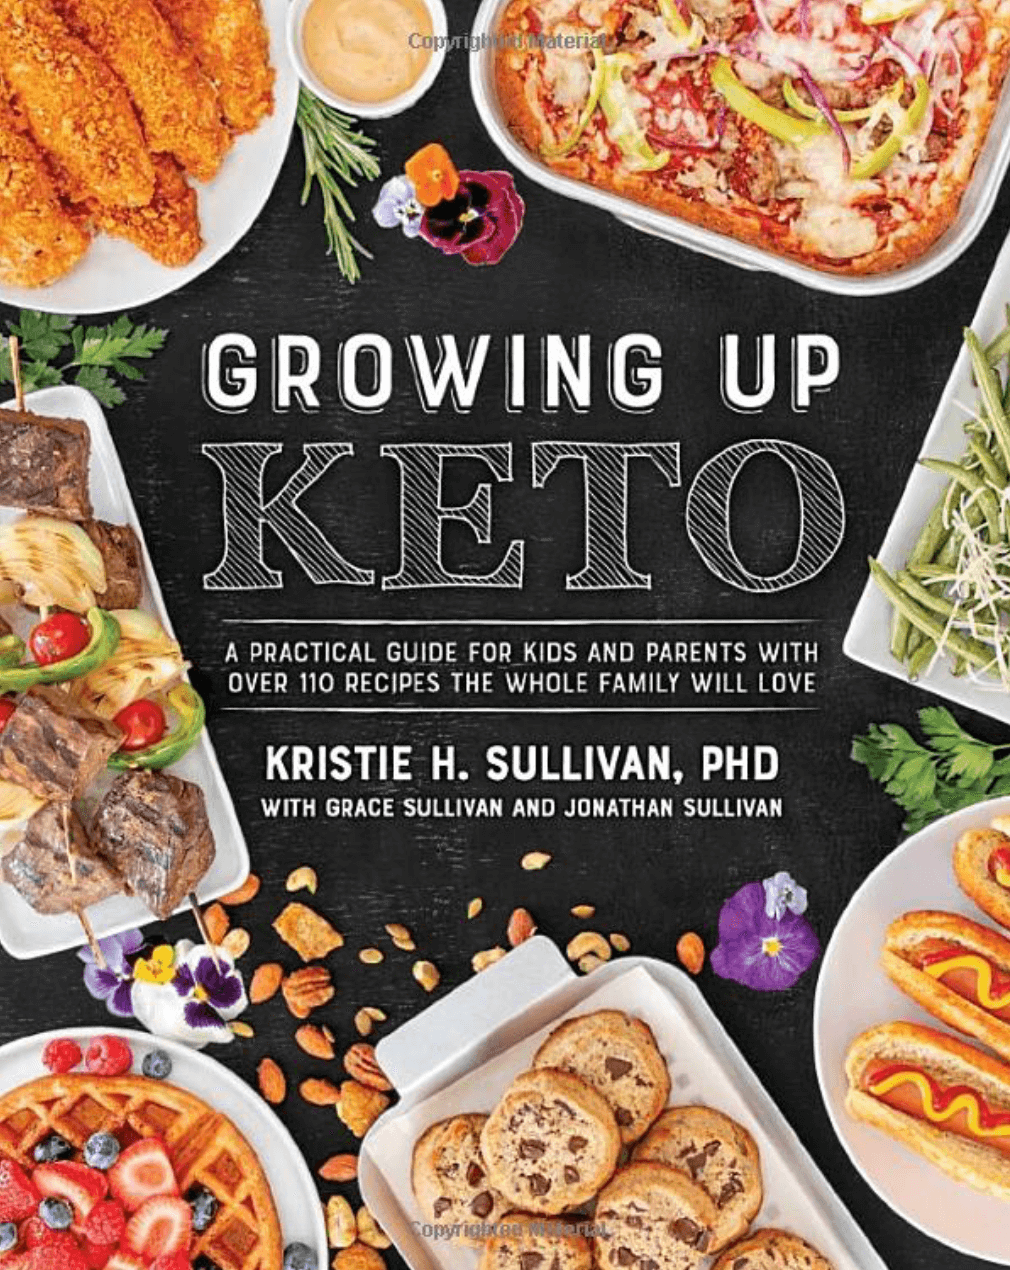 Growing Up Keto, by Kristie Sullivan